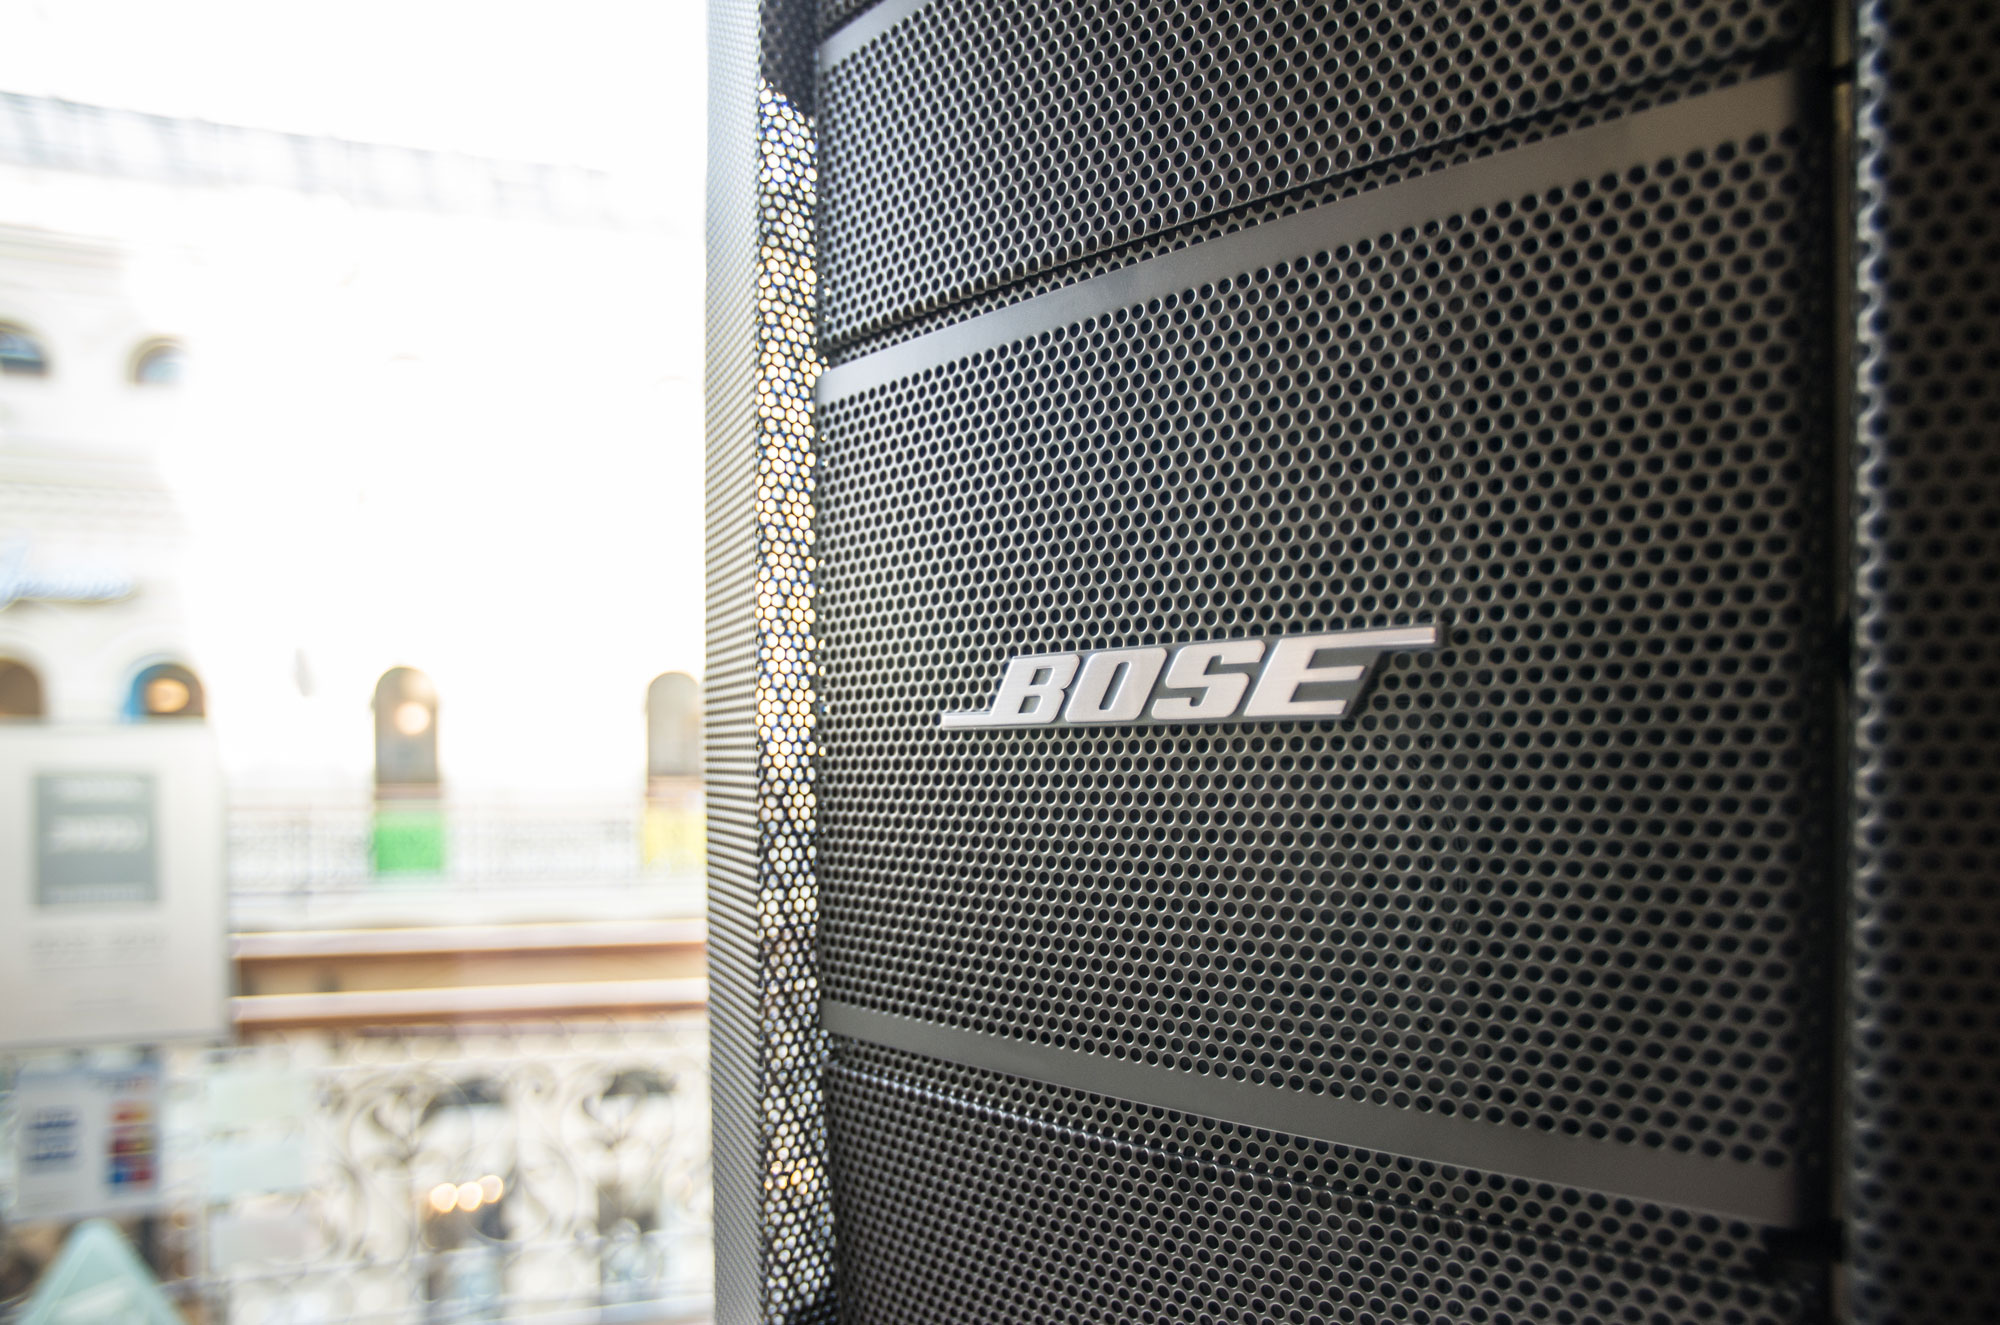 Bose москва. Фирма Bose. Техника фирмы Bose. Bose logo. Музыкальная стойка Bose.